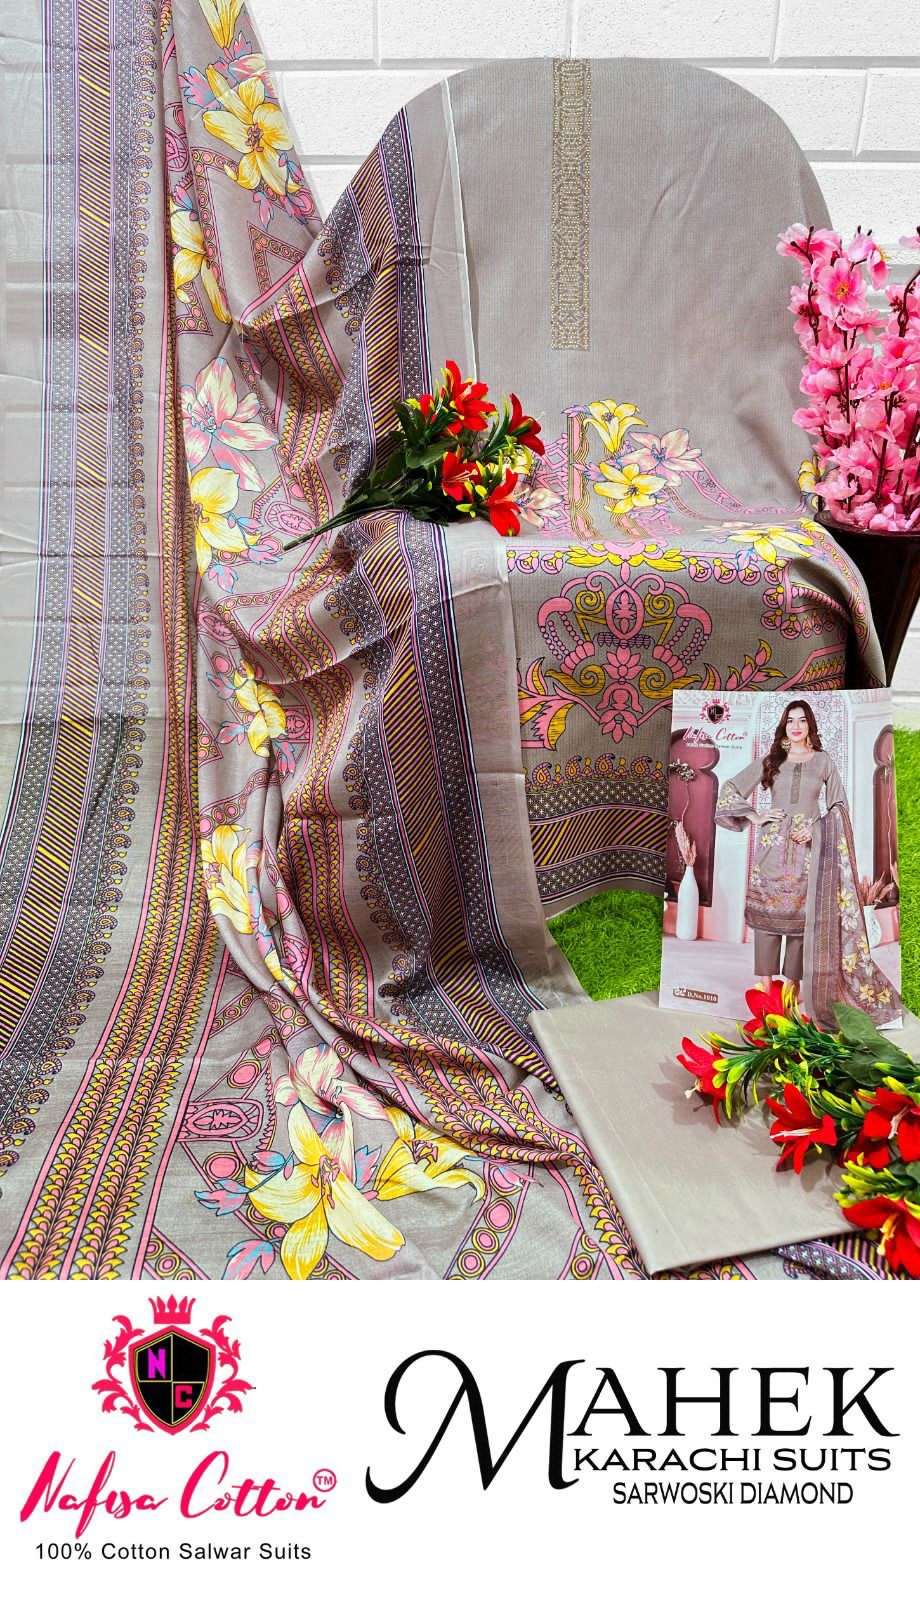 nafisha cotton mahek karachi suits 1001-1010 series latest pakistani salwar kameez wholesaler surat gujarat